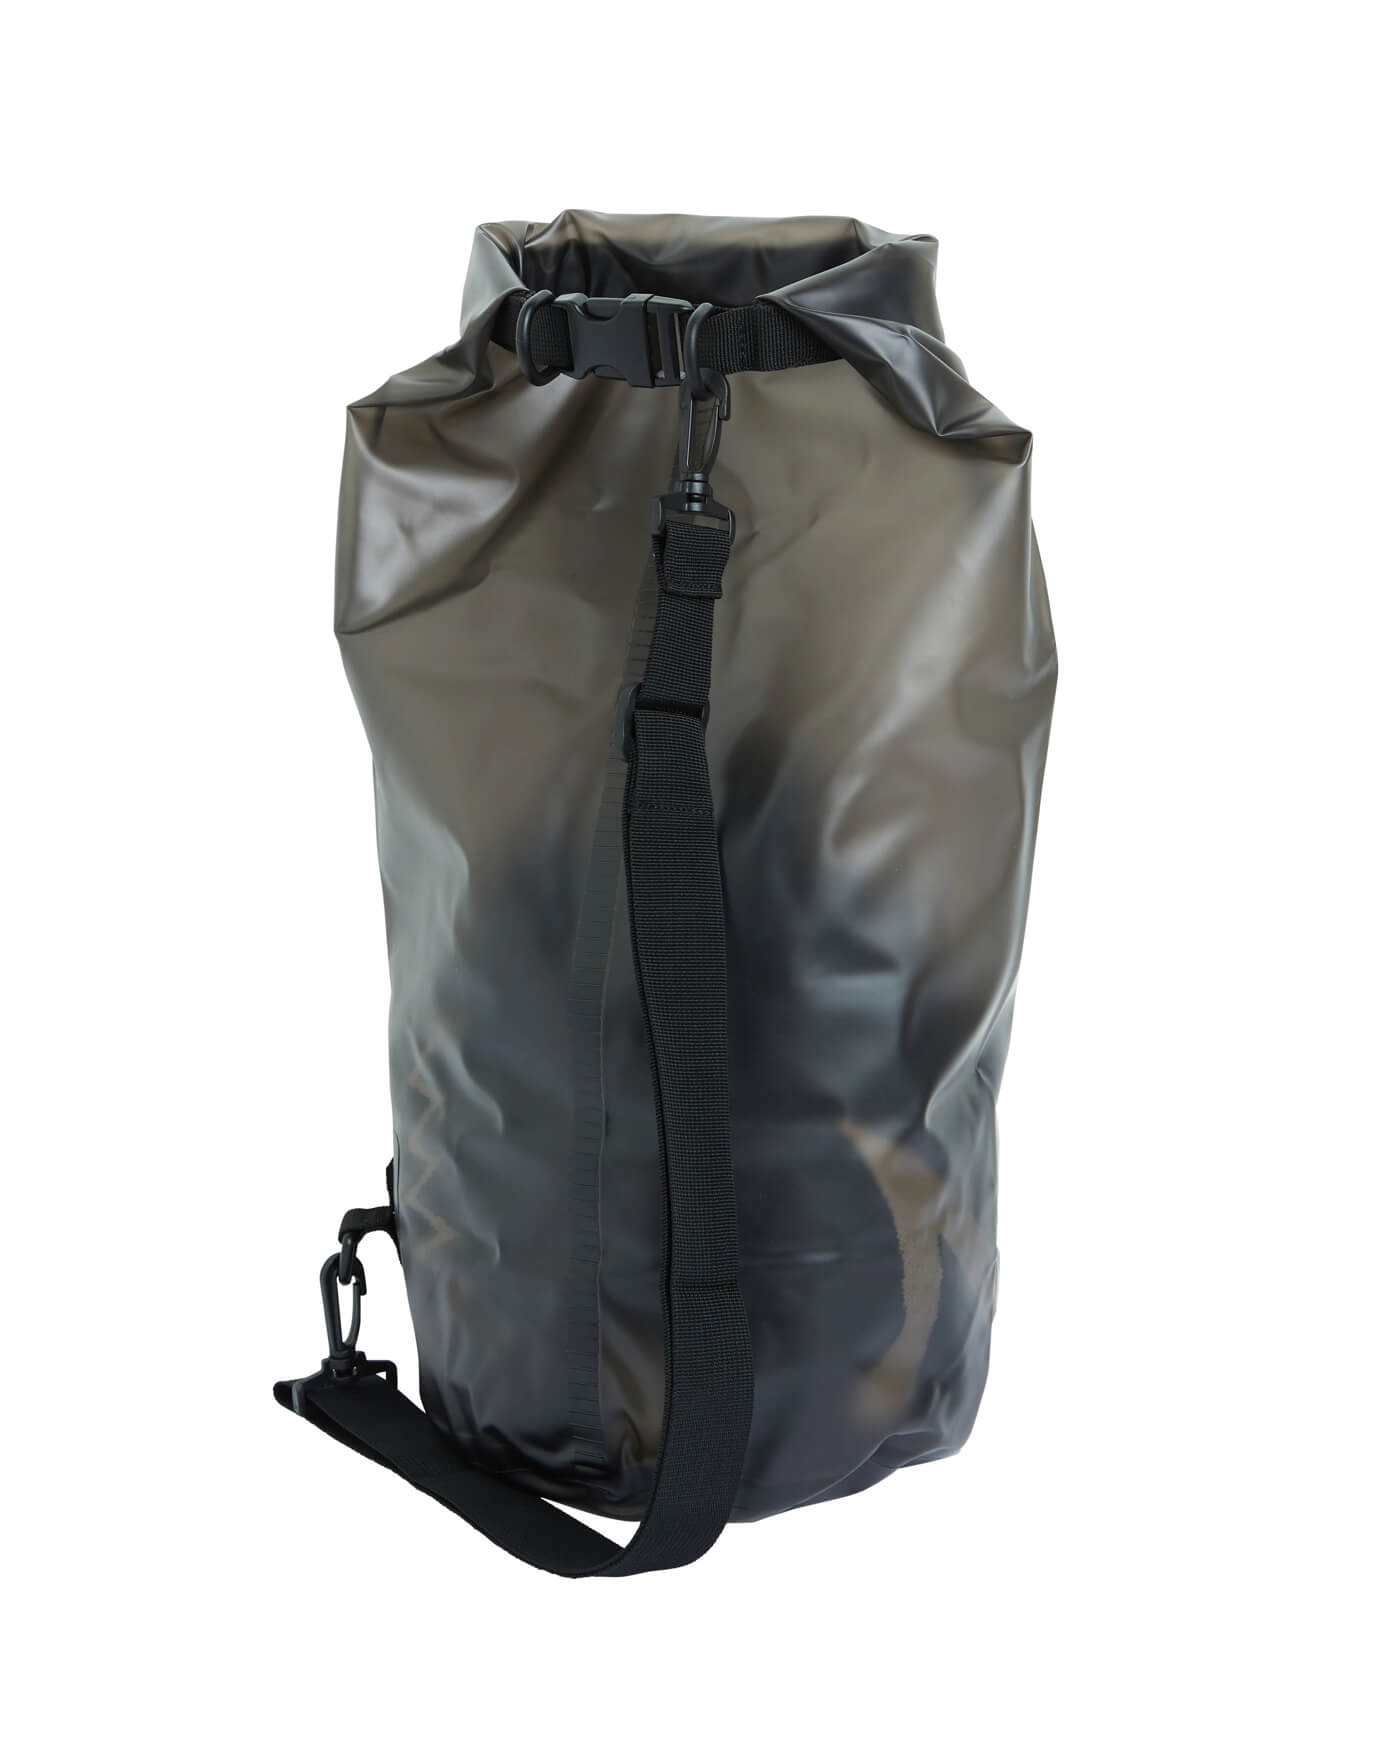 Wetsuit Dry Bag - Black